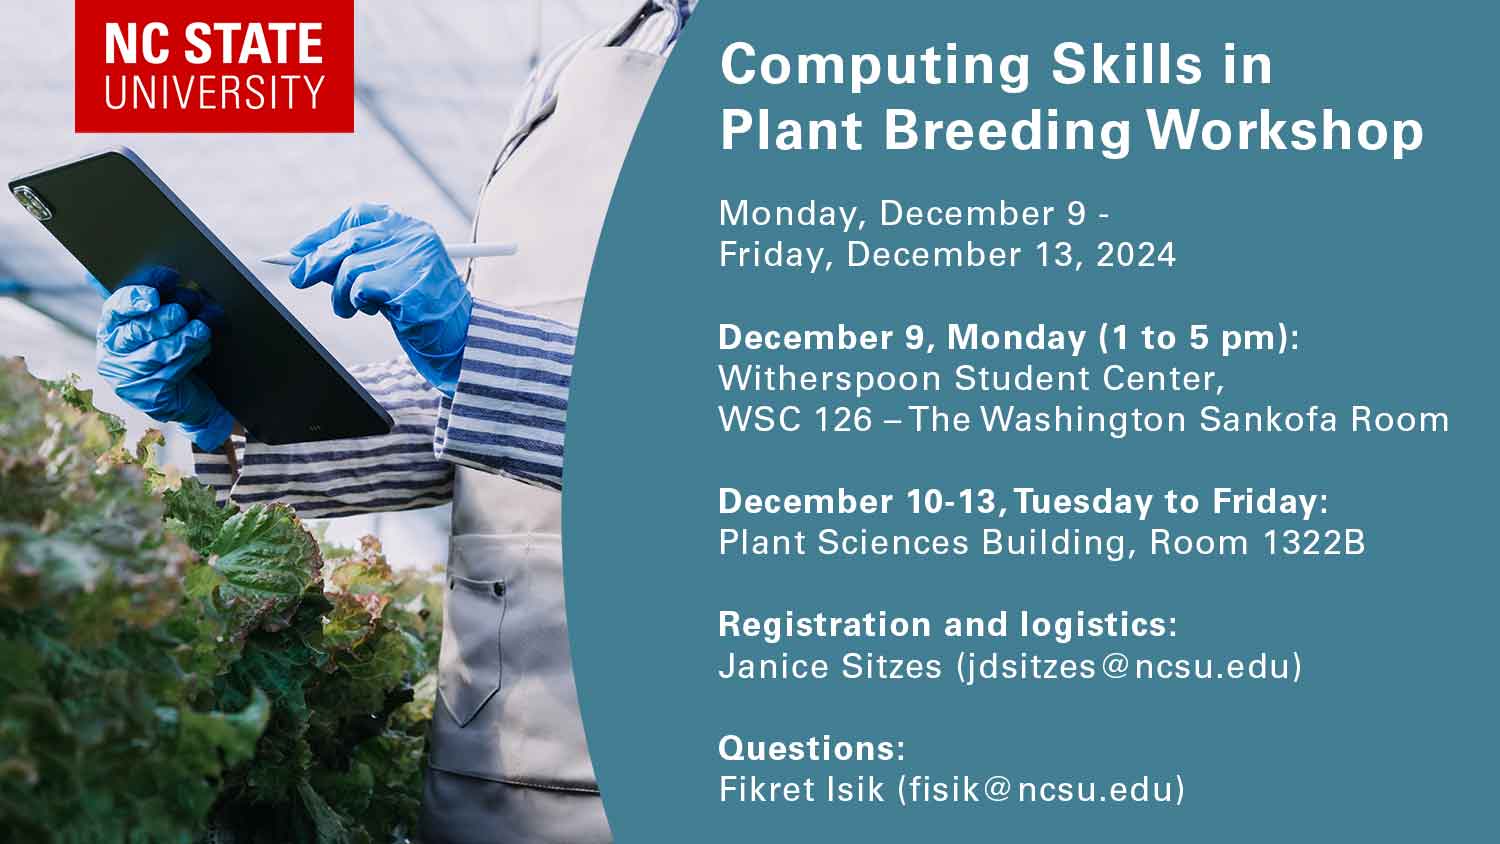 Computing skills in plant breeding announcement